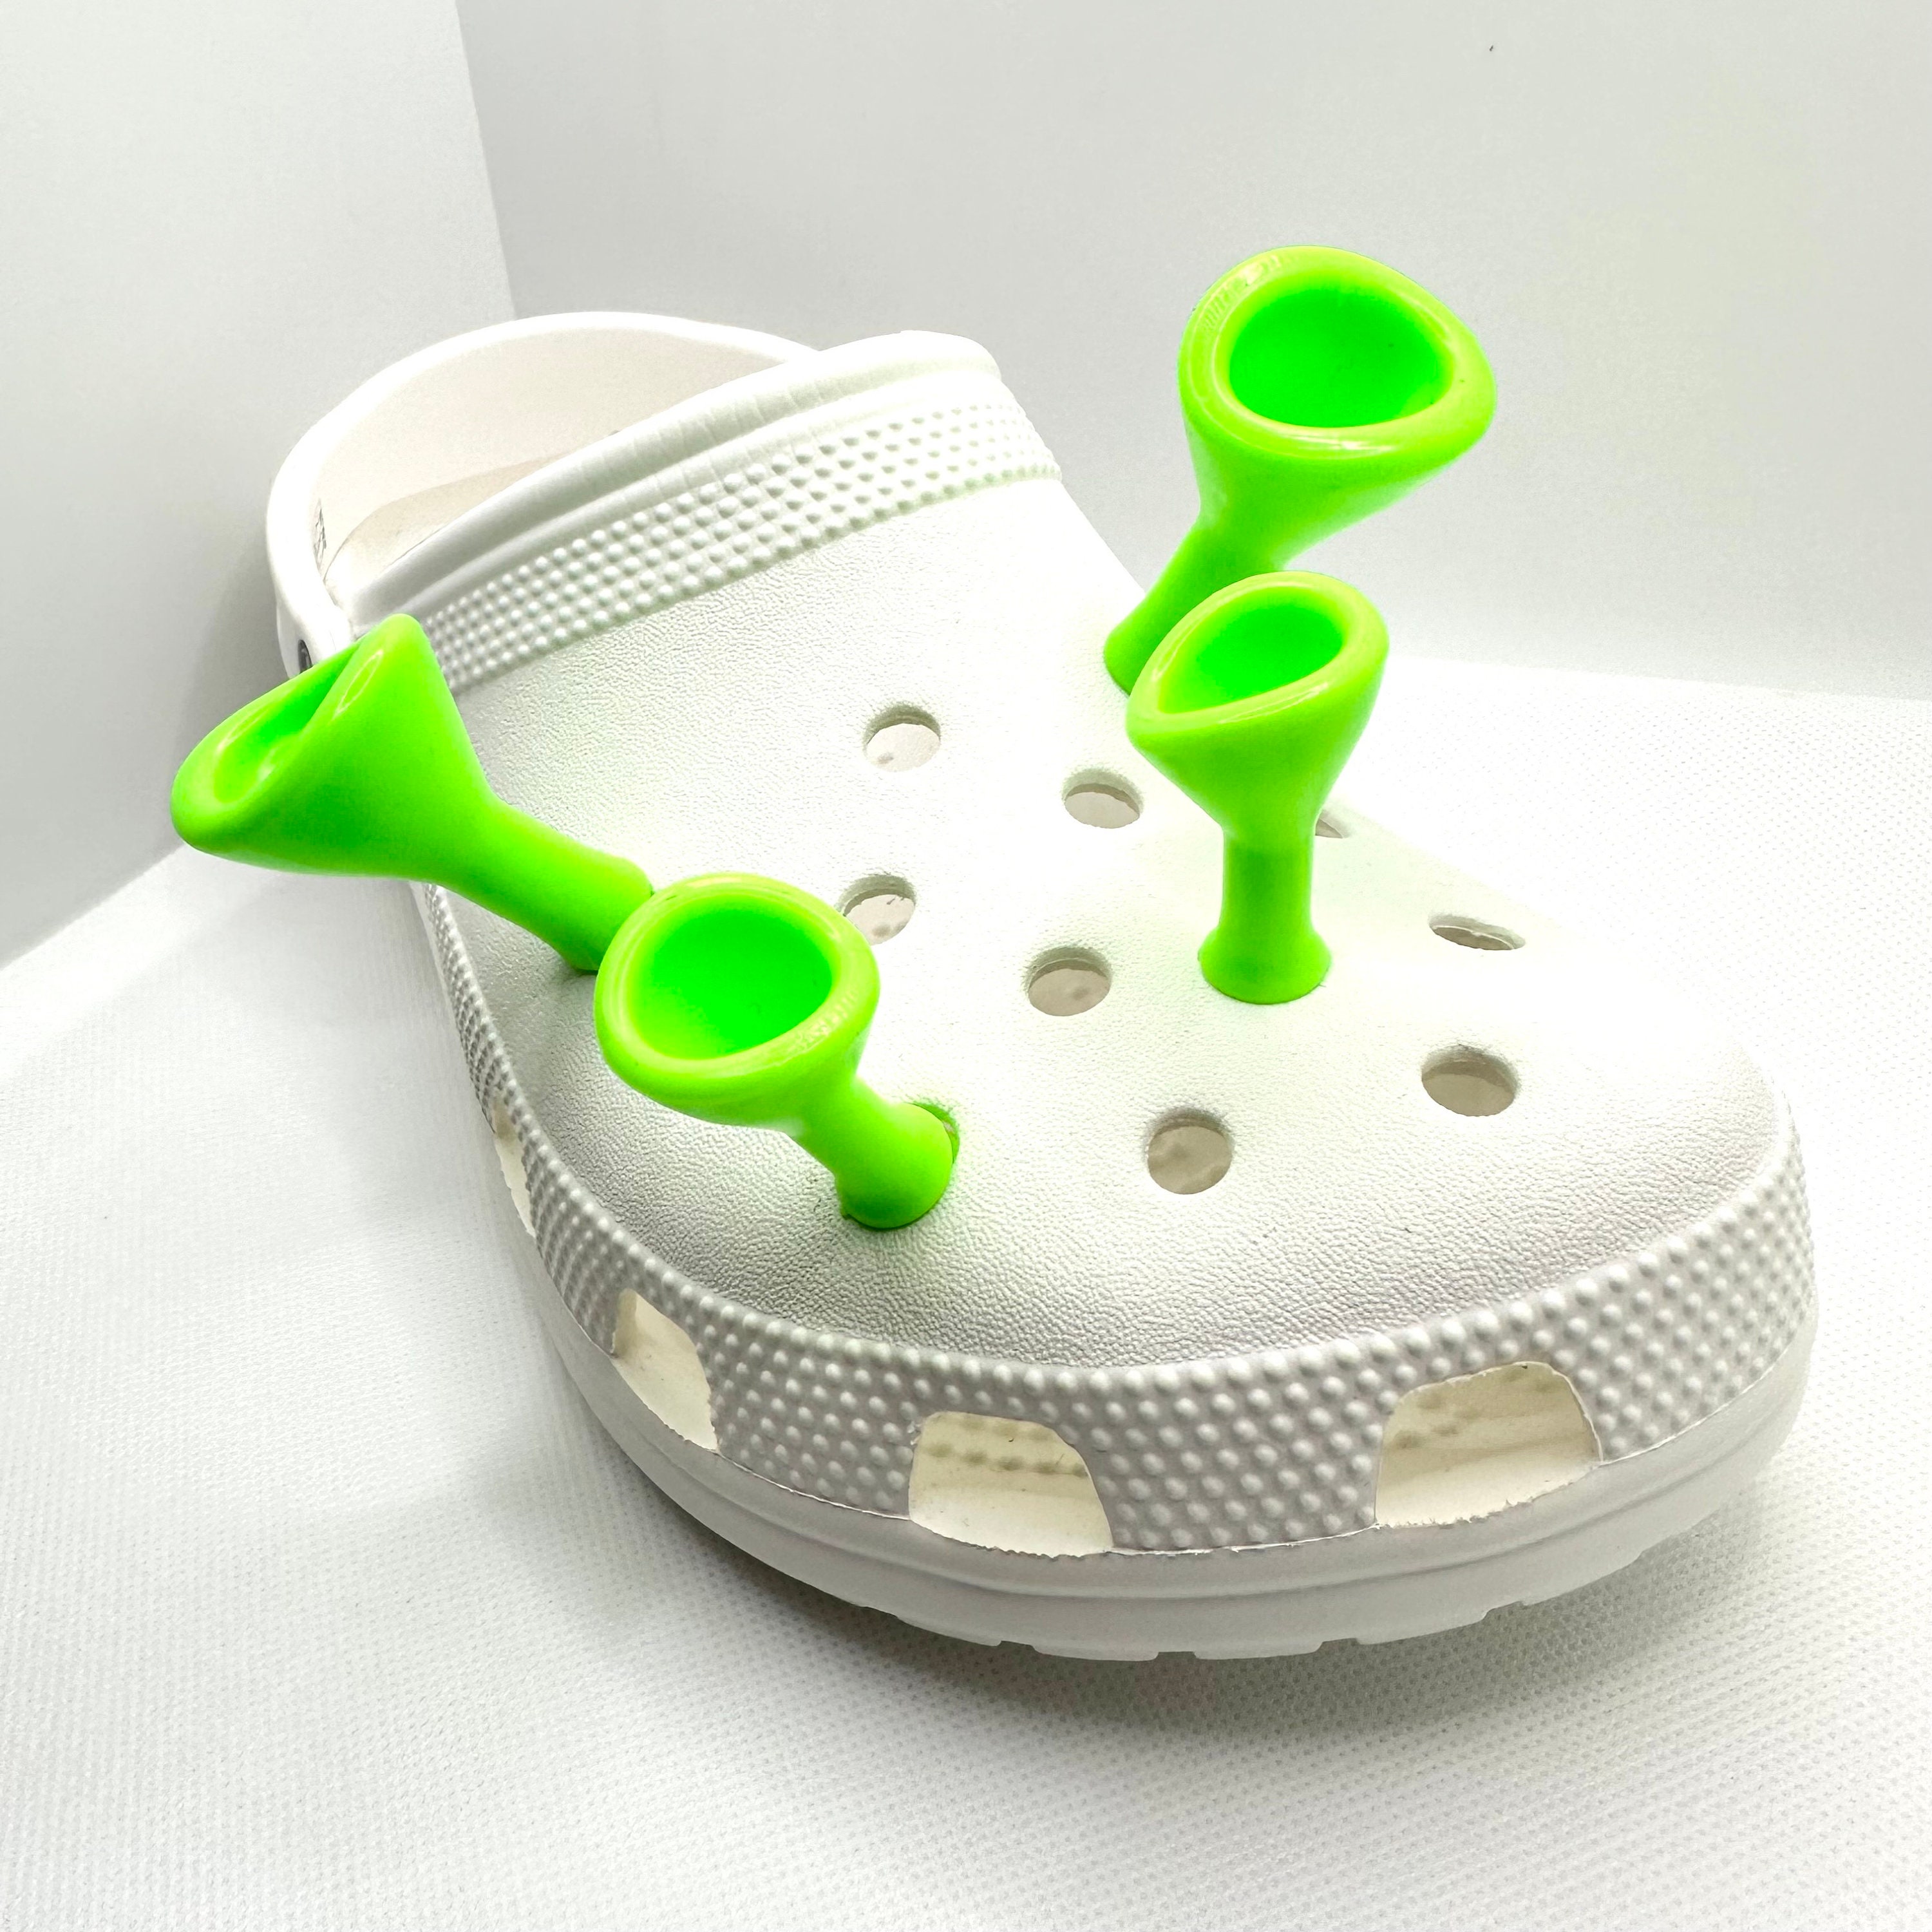 Shrek Ear Croc Shoe Charm - Ogre Ears Croc Charm Accessories x4 Ears - 100%  Citrus Green Match : : Fashion